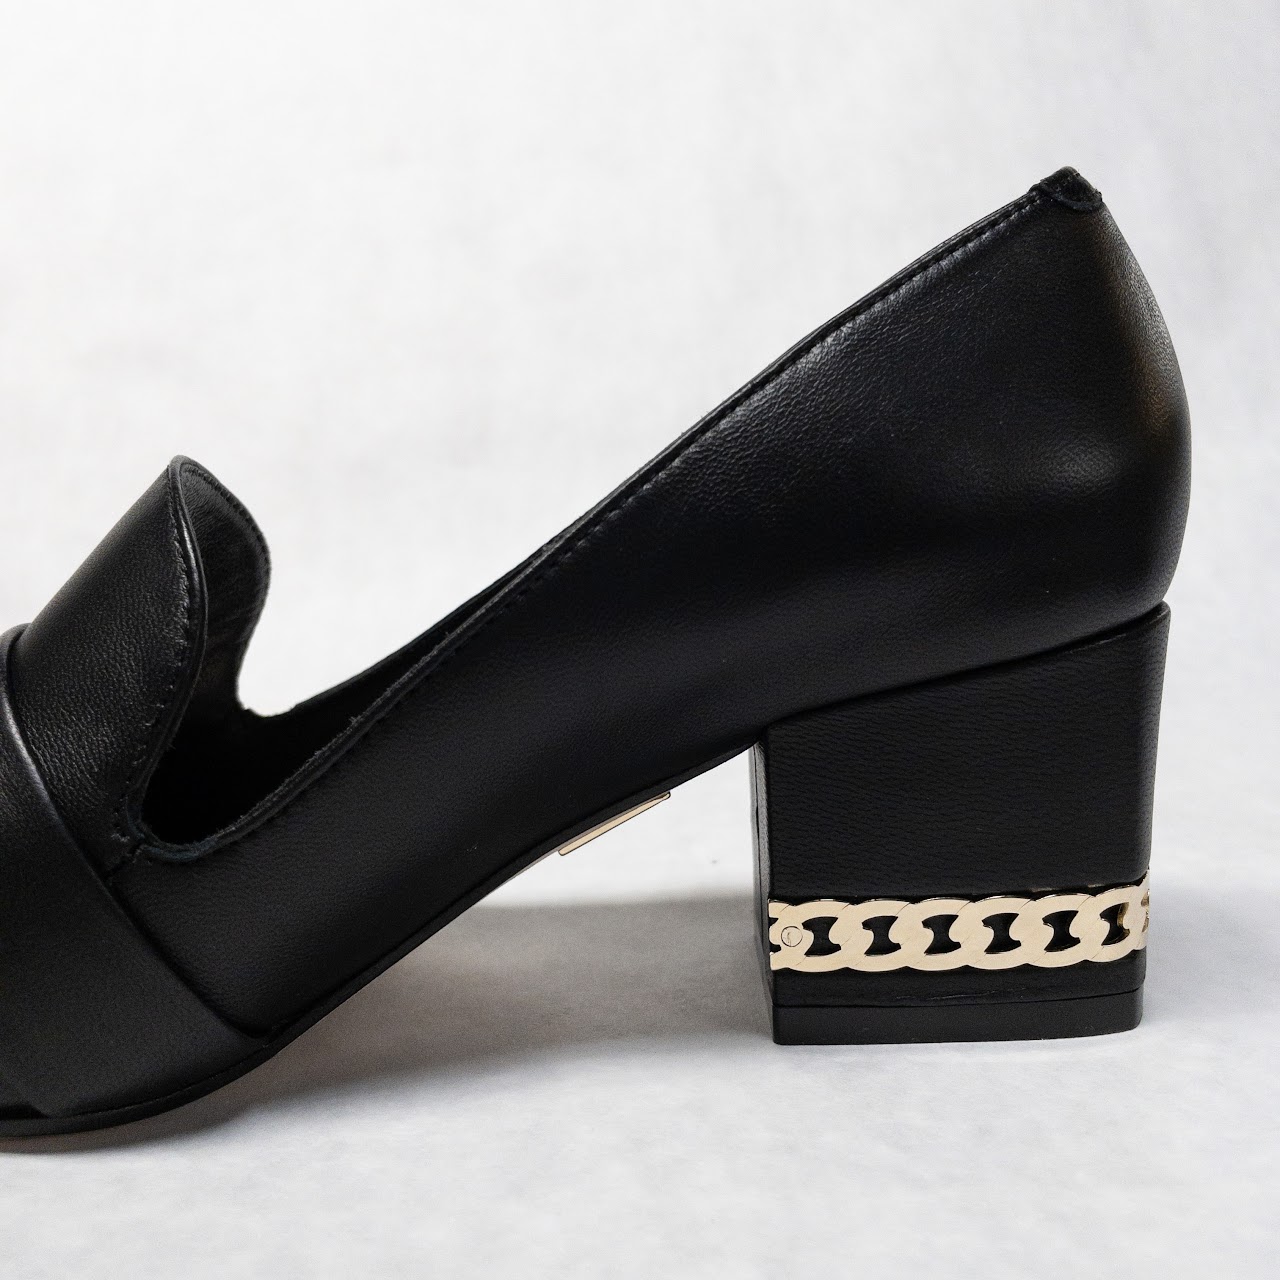 Tamara Mellon Black Leather Block Heel Pumps